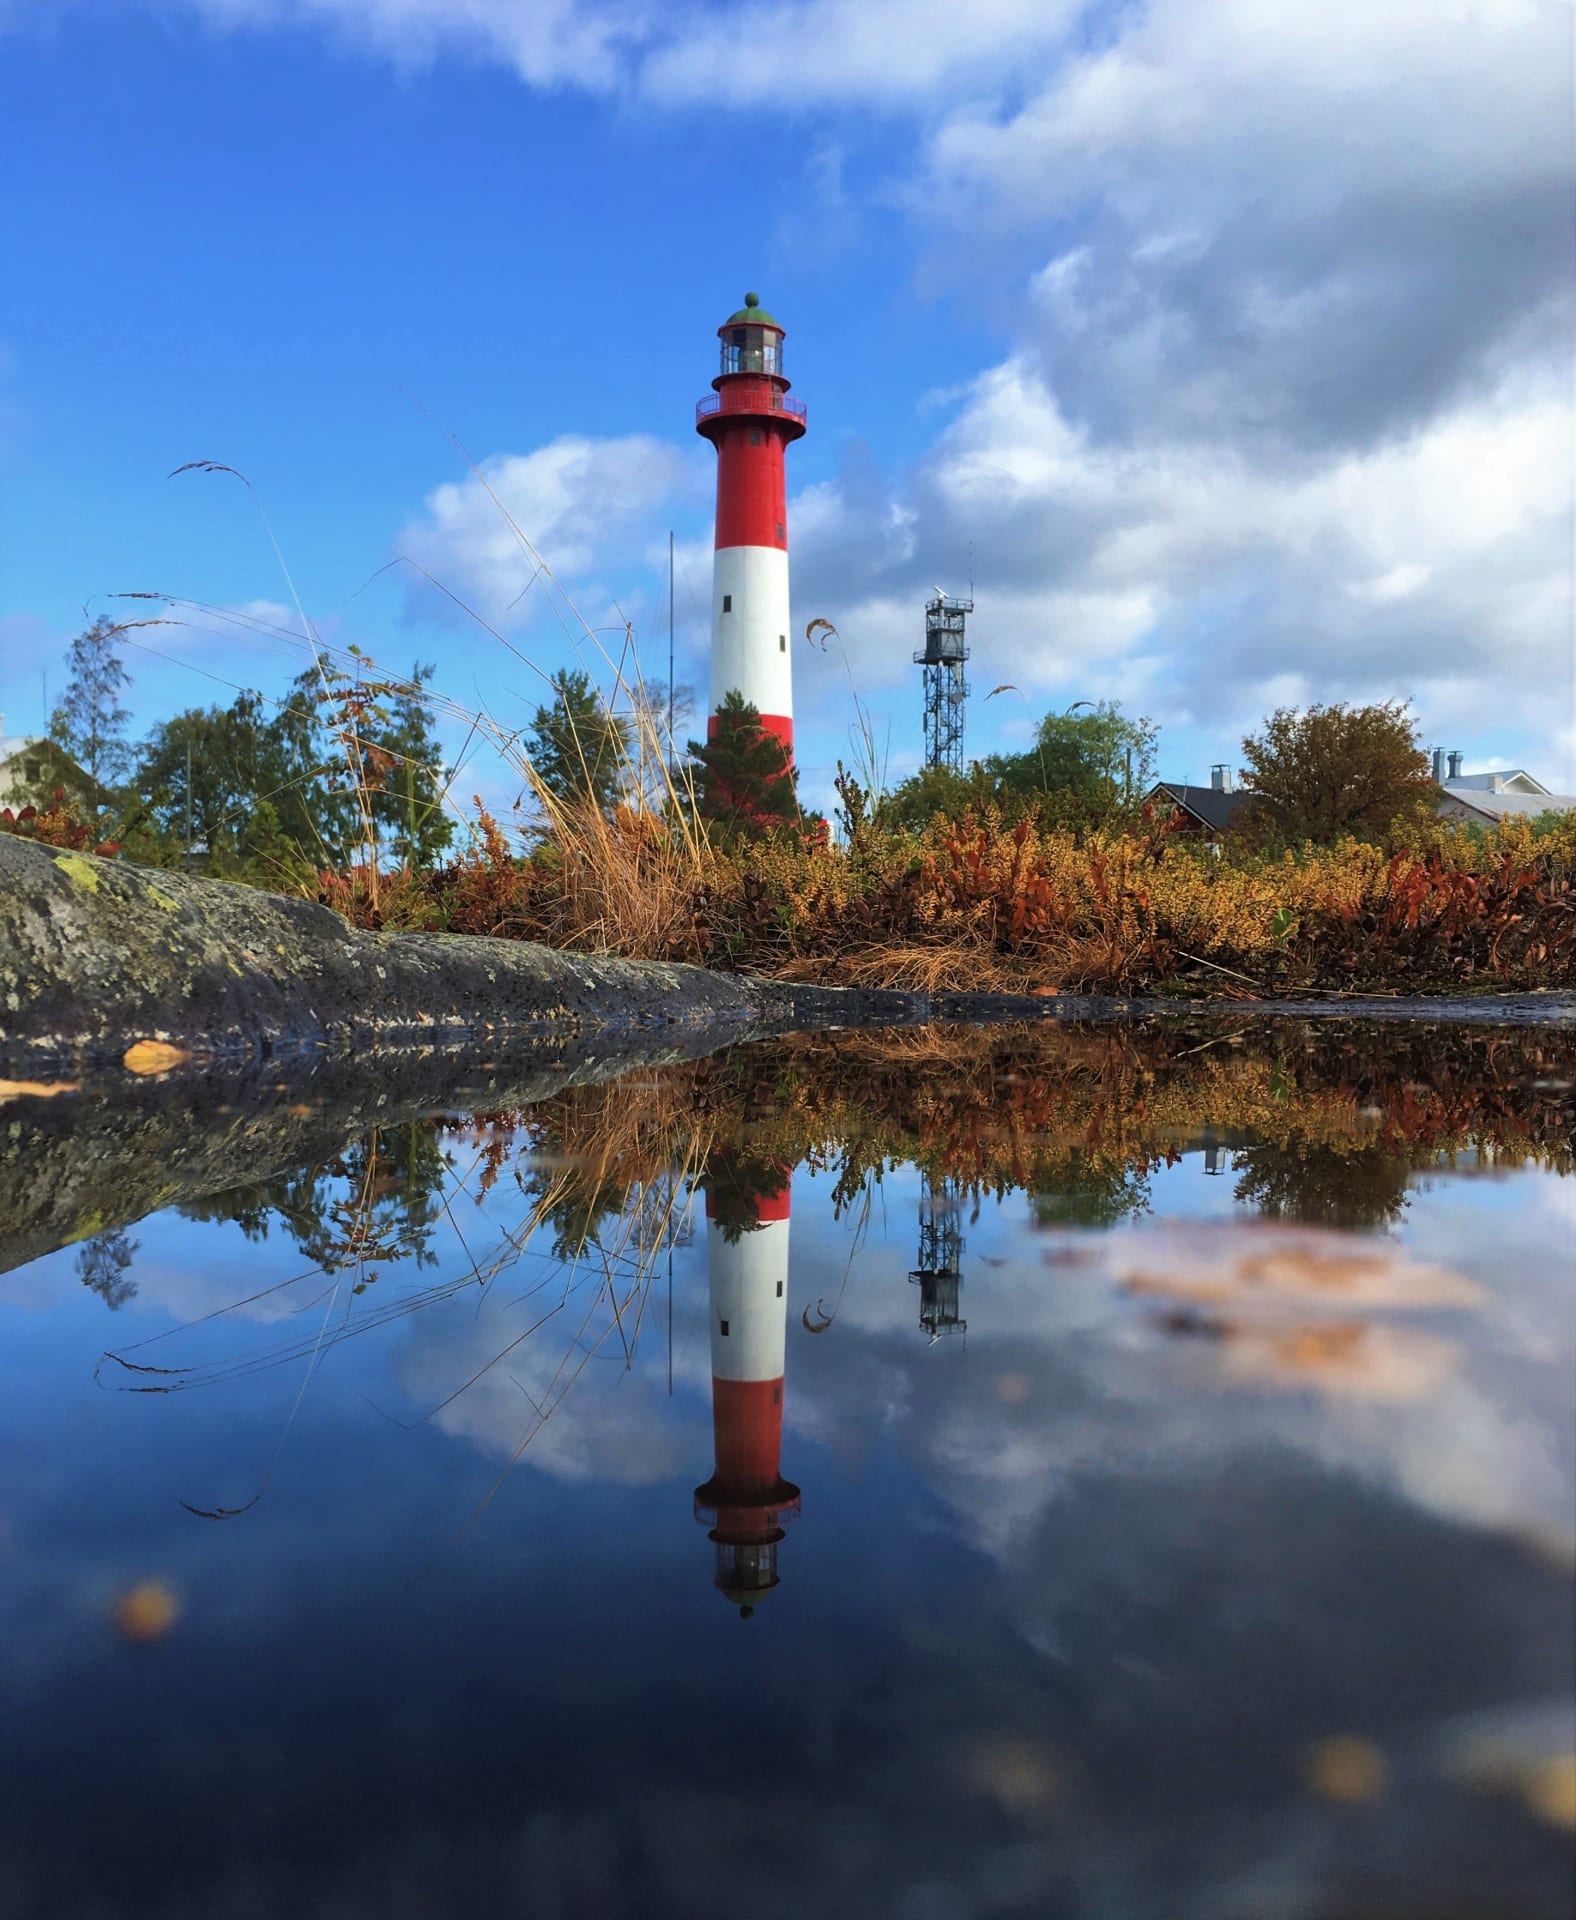 The pond on Tankar mirrors the lighthouse